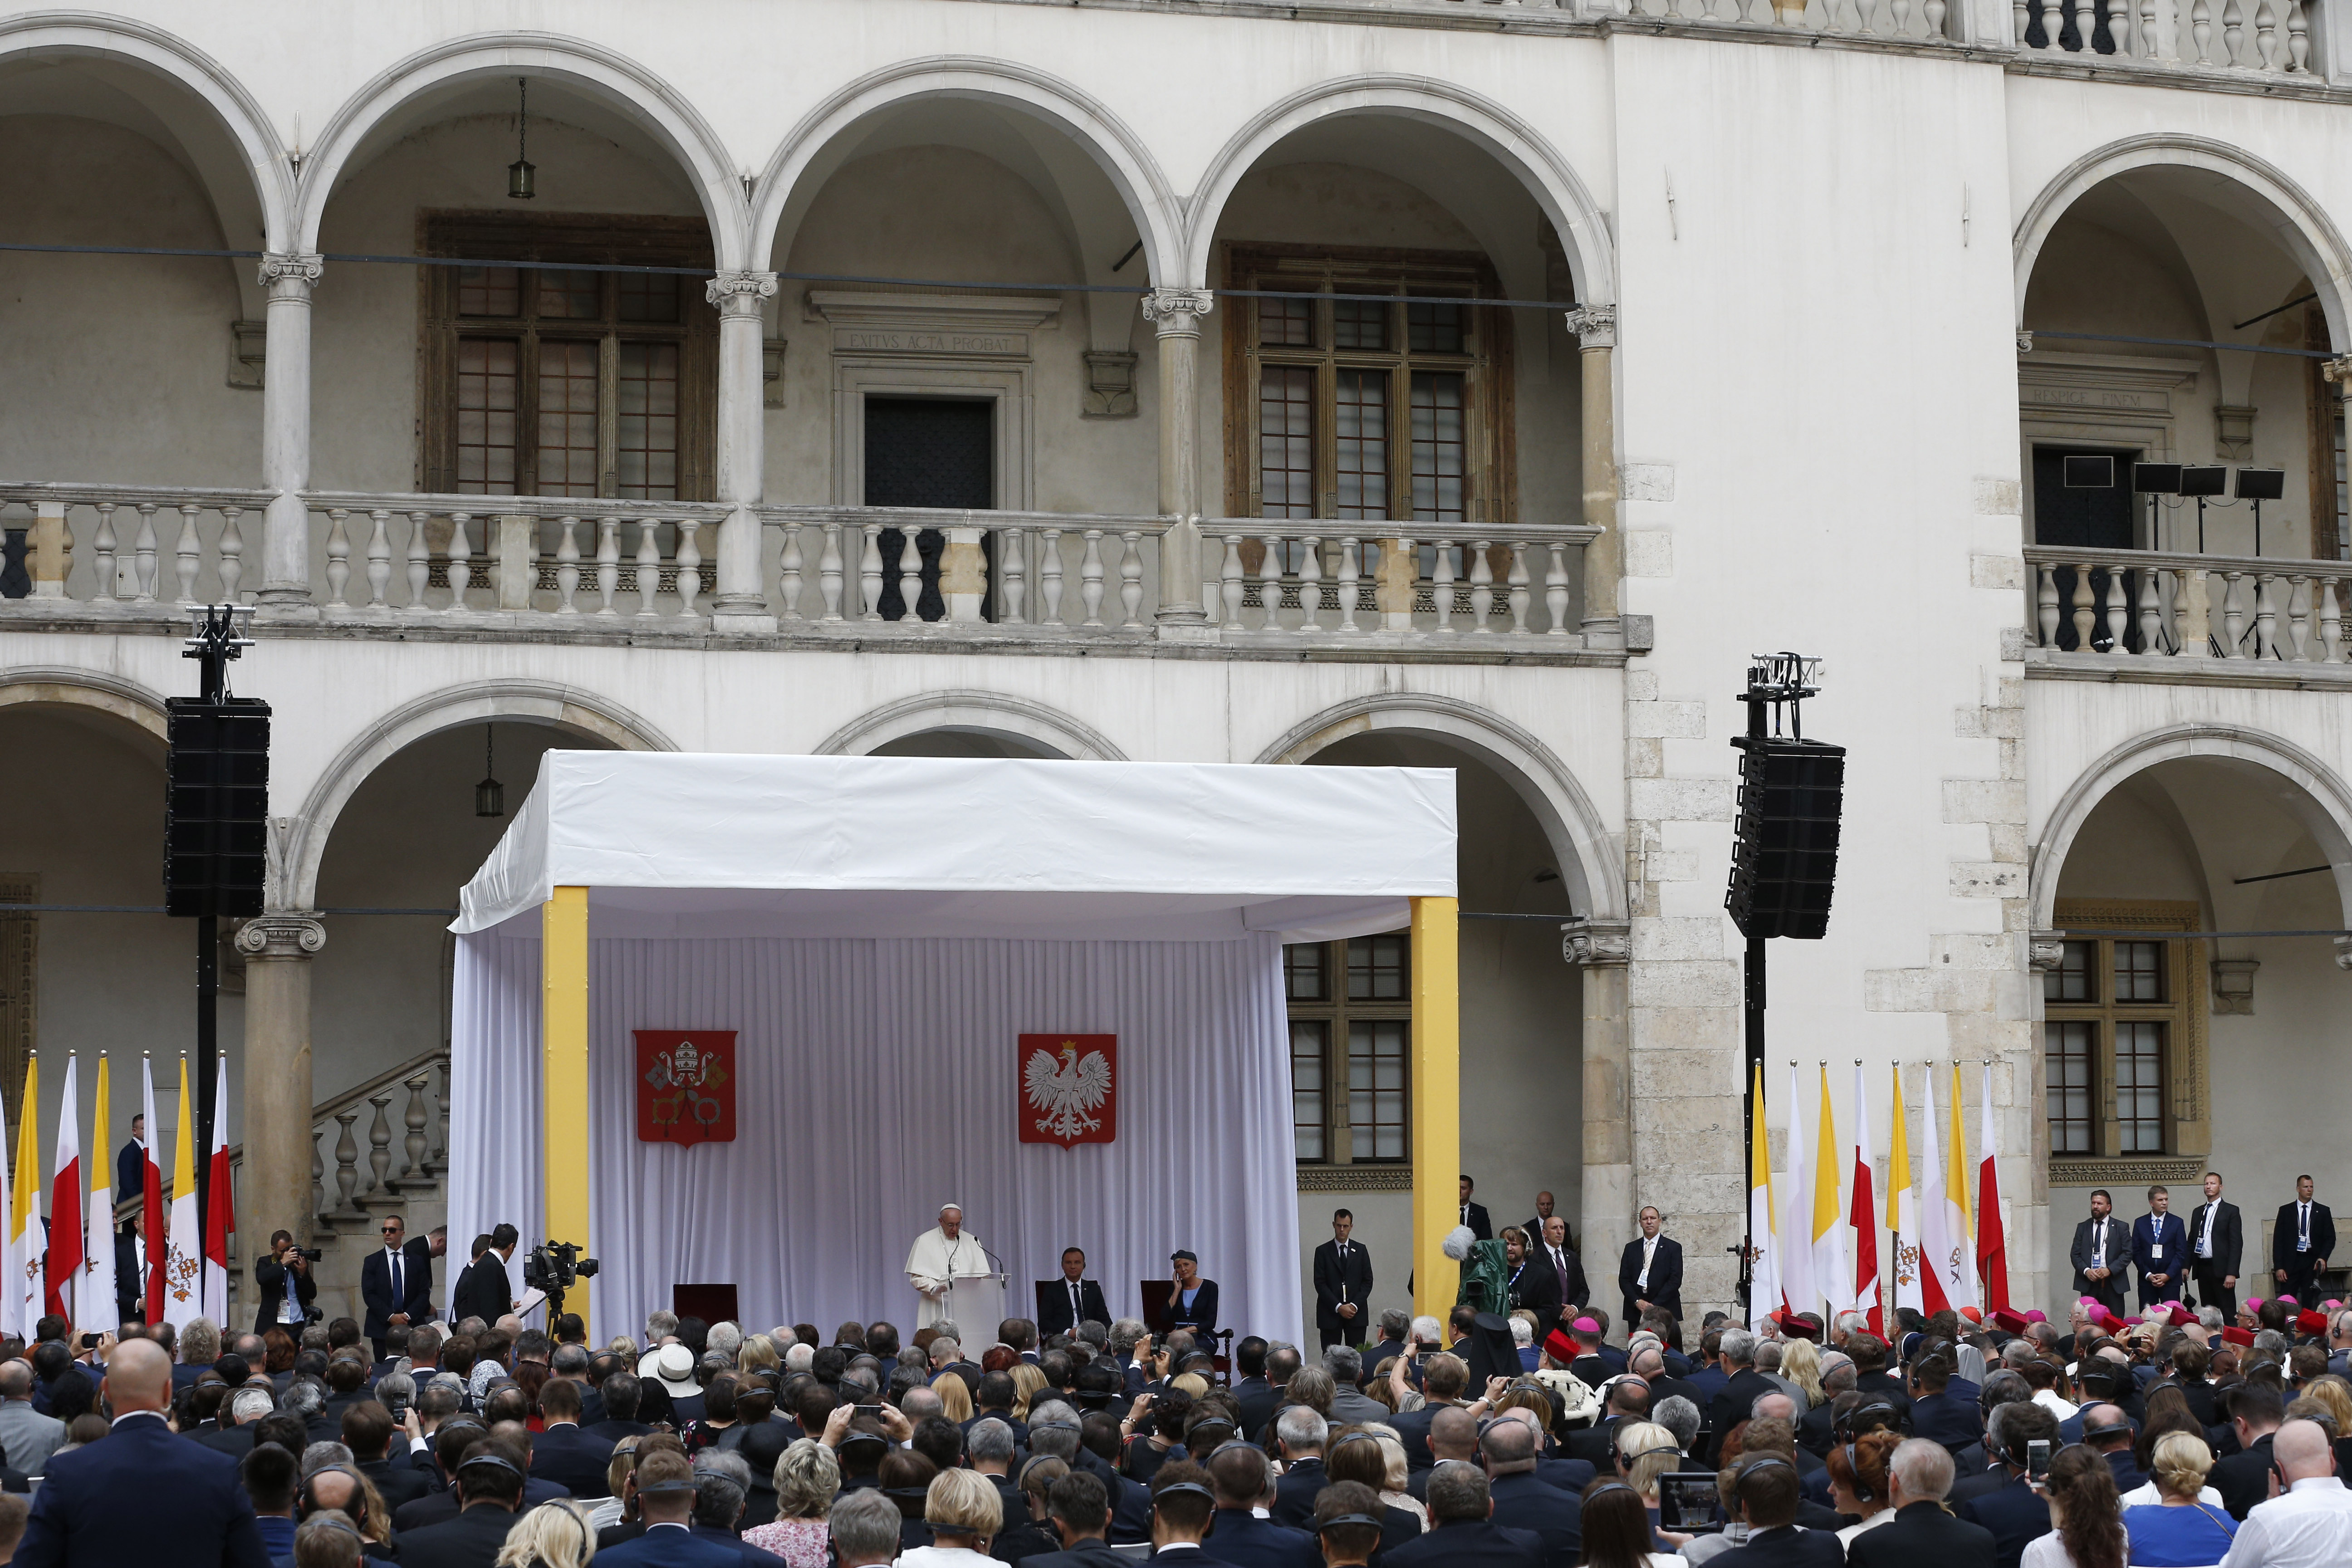 Pope Francis speaking at Wawel Royal Castle